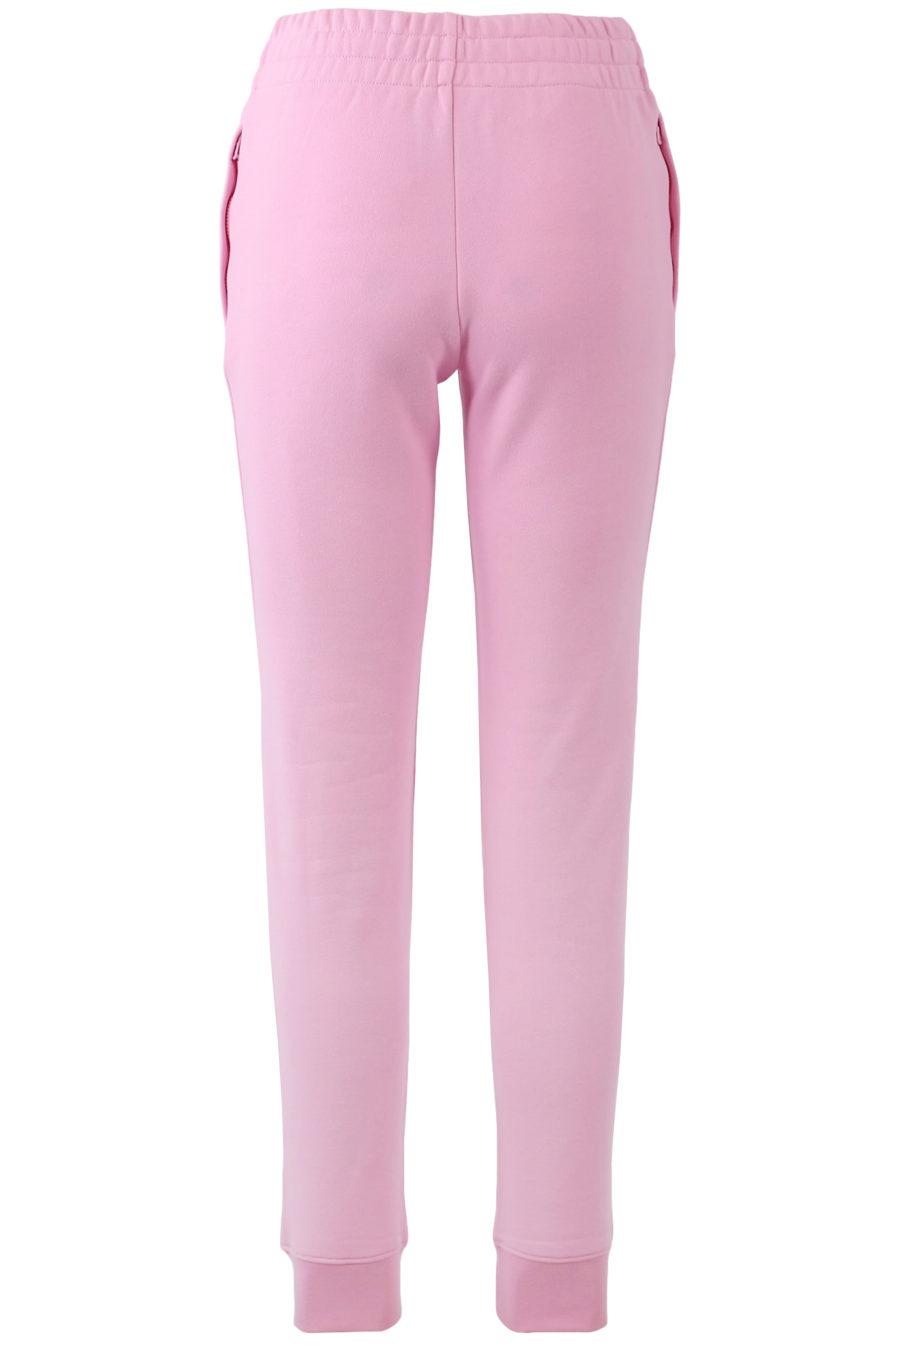 Pantalón de color rosa con logo de cristales - IMG 7276 copia